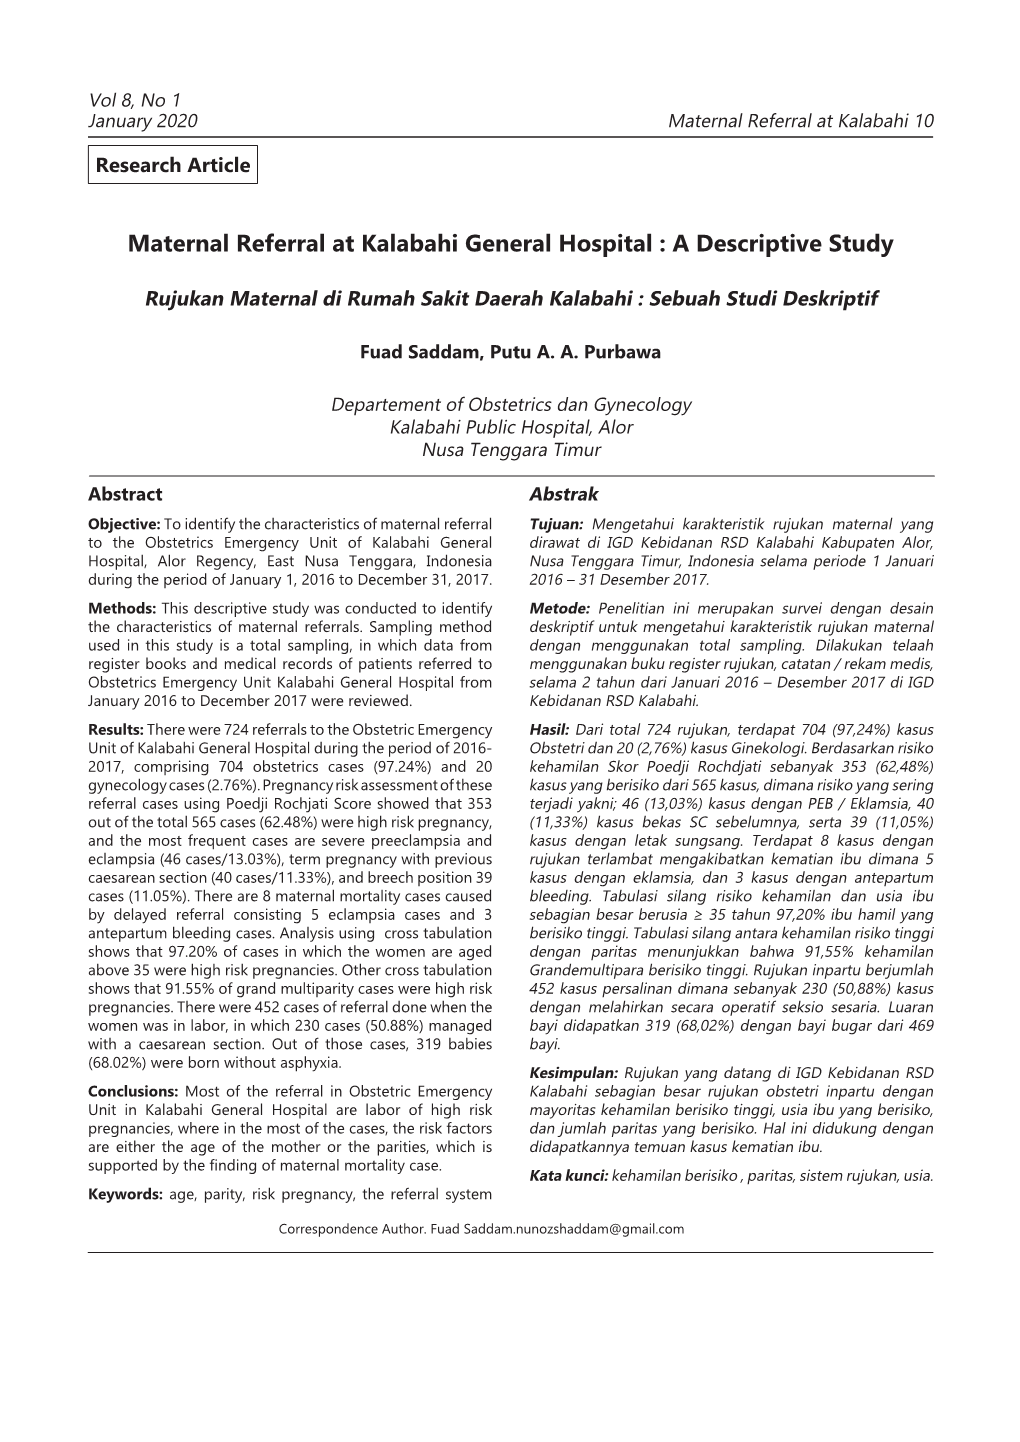 Maternal Referral at Kalabahi General Hospital : a Descriptive Study